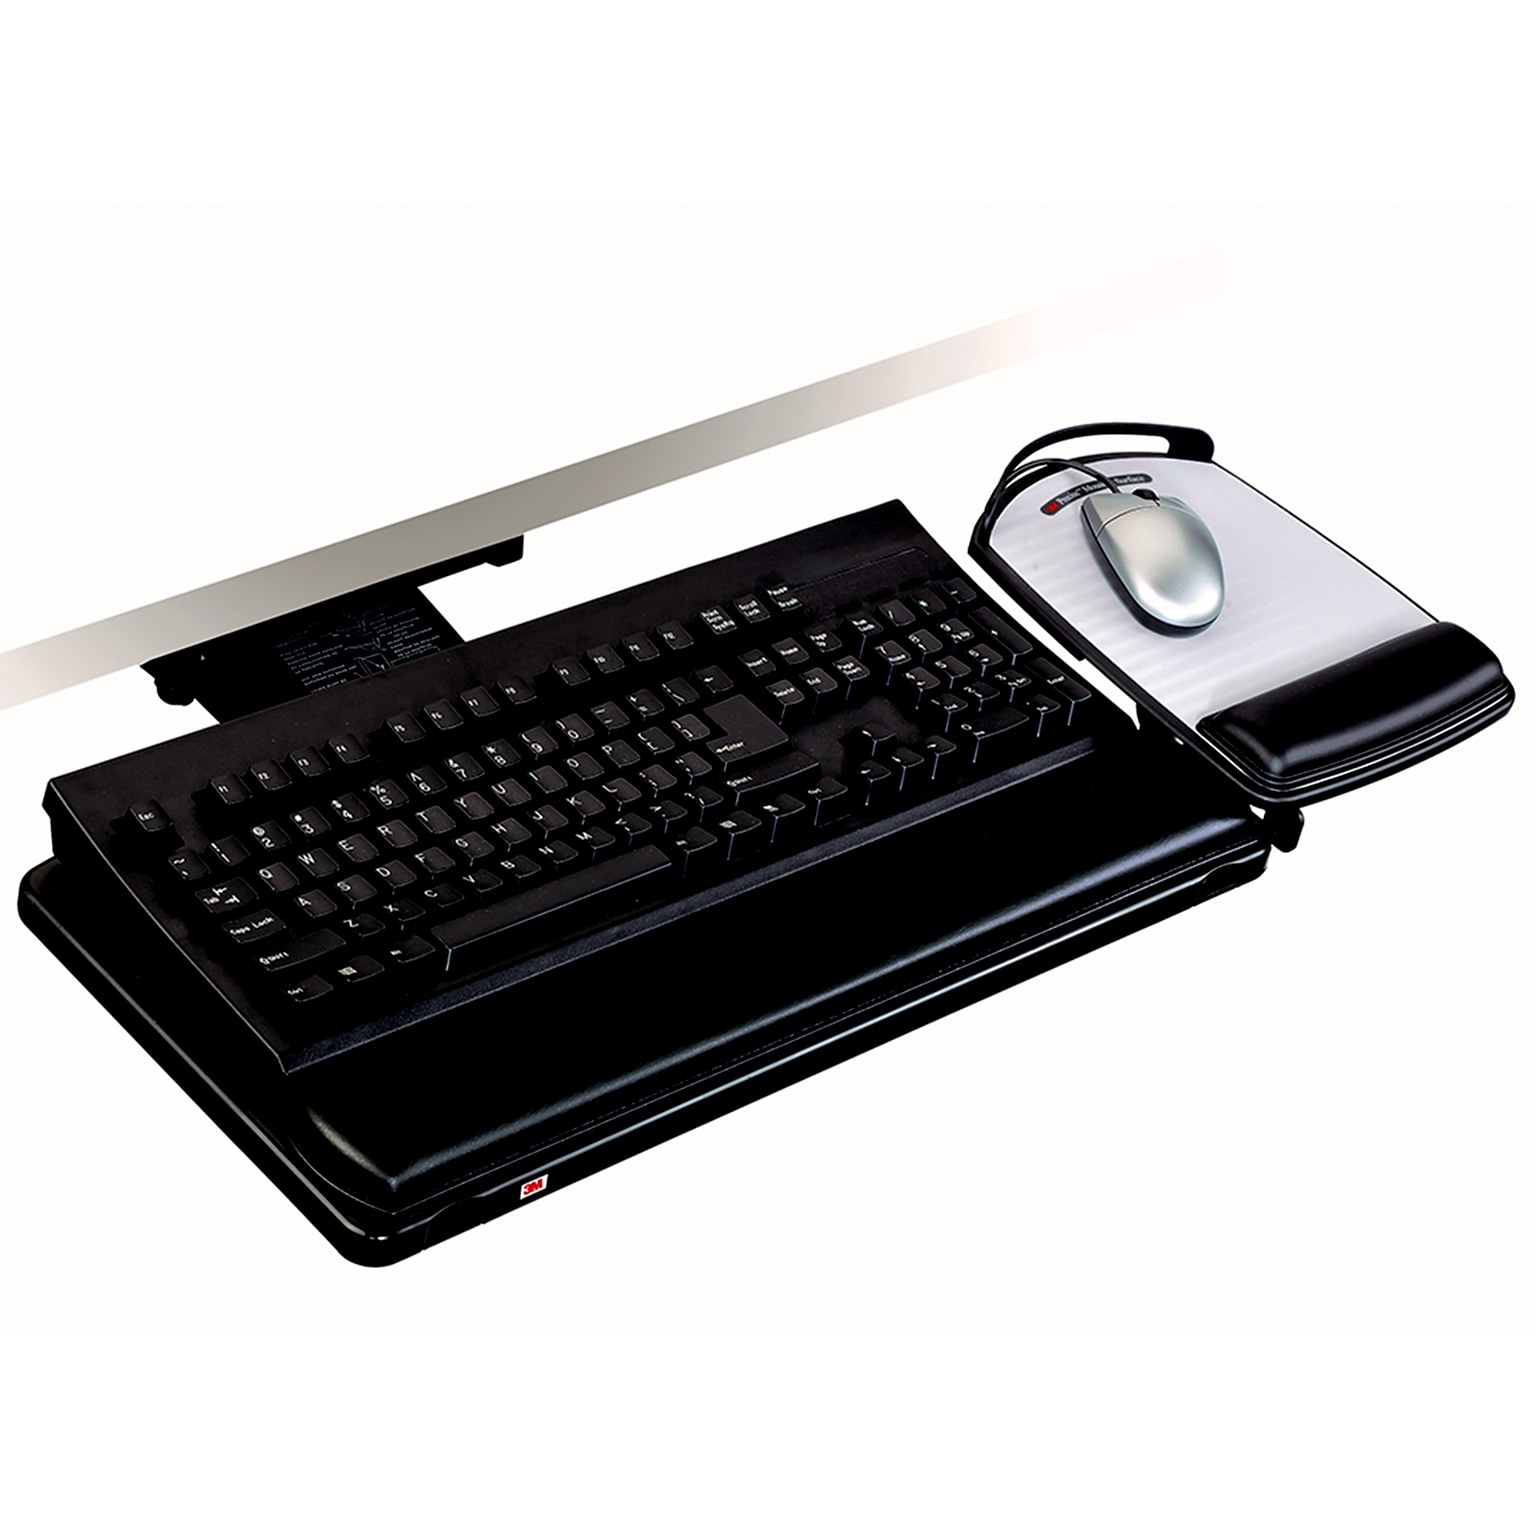 3M Knob Adjust Keyboard Tray, 26.75 x 10.5 Adjustable Platform, 17.75 Track, Black, Wrist Rest and Mouse Pad (AKT80LE)